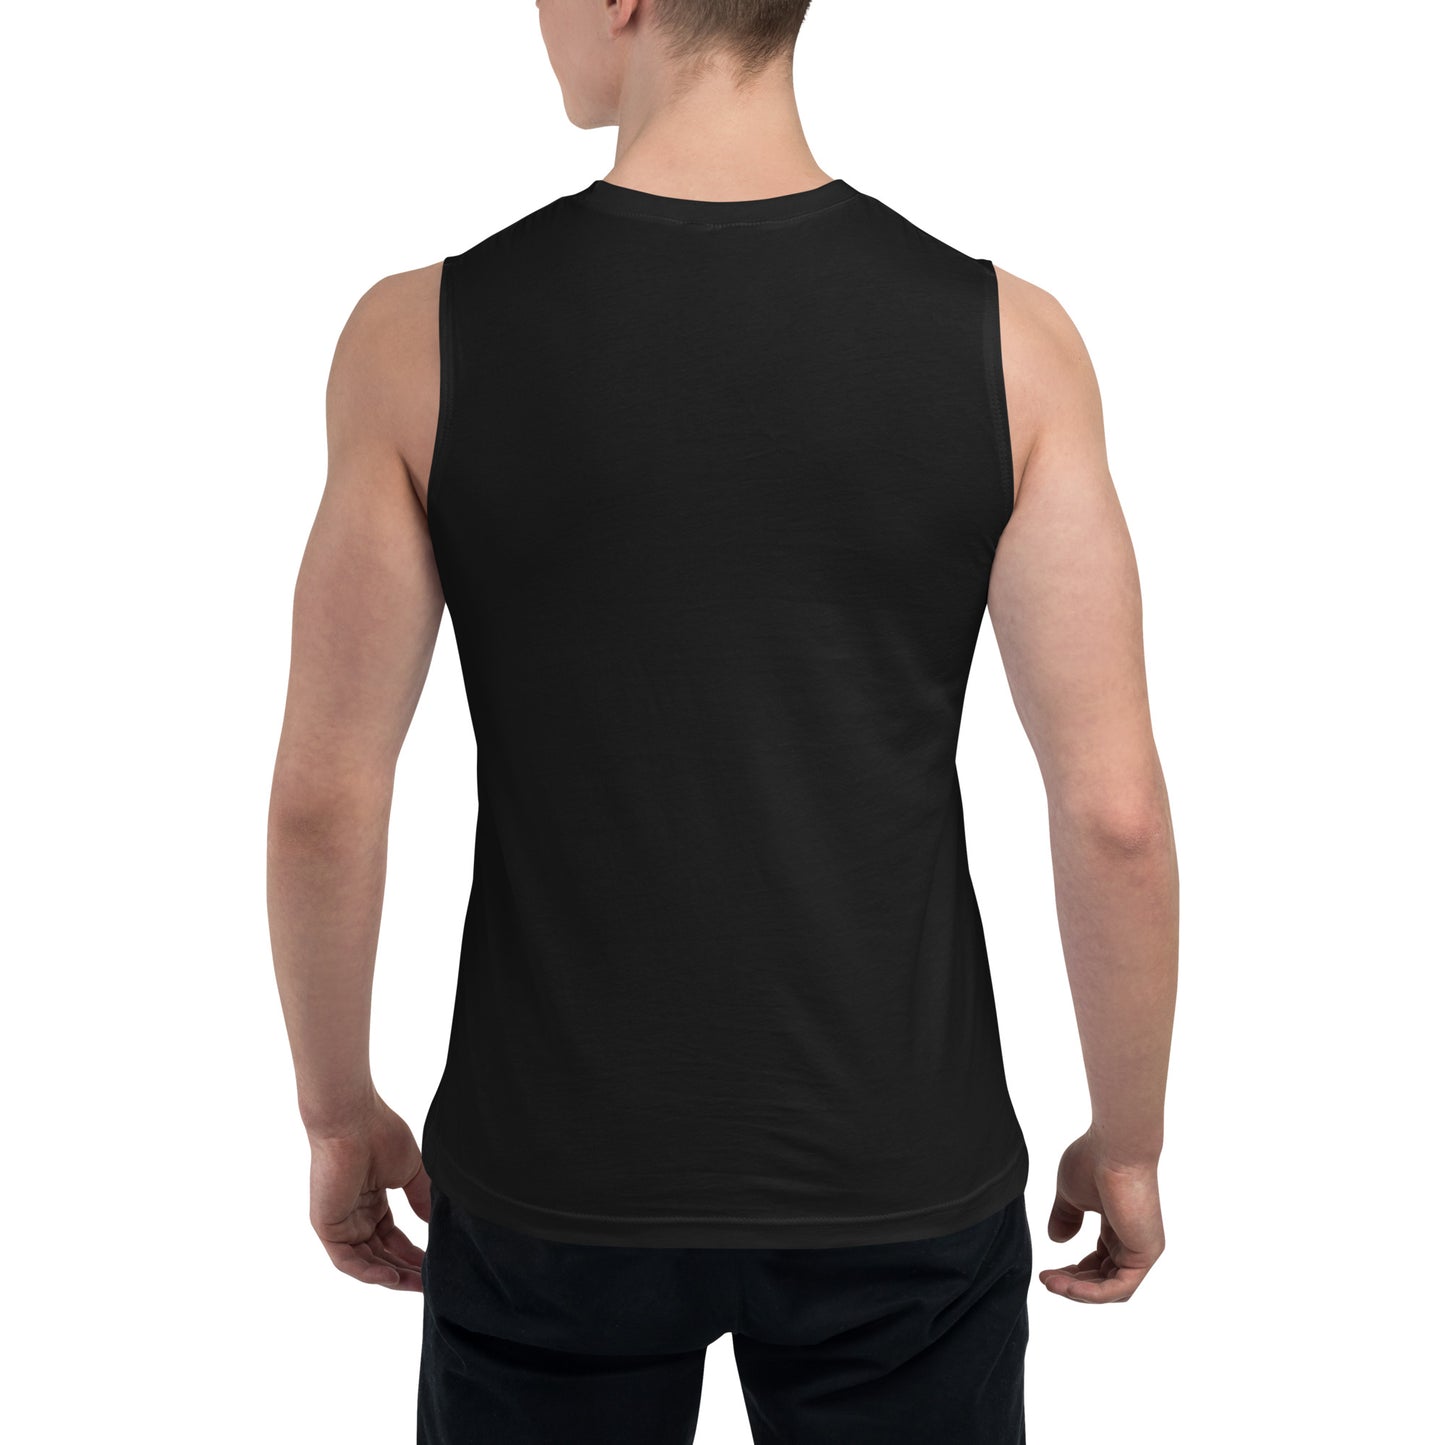 Sleeveless Muscle Shirt : Starflower - Black w/ Olive print